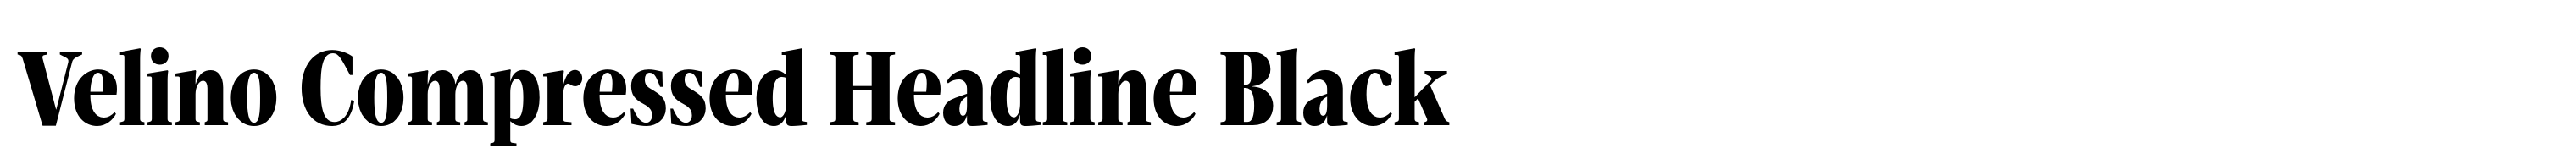 Velino Compressed Headline Black